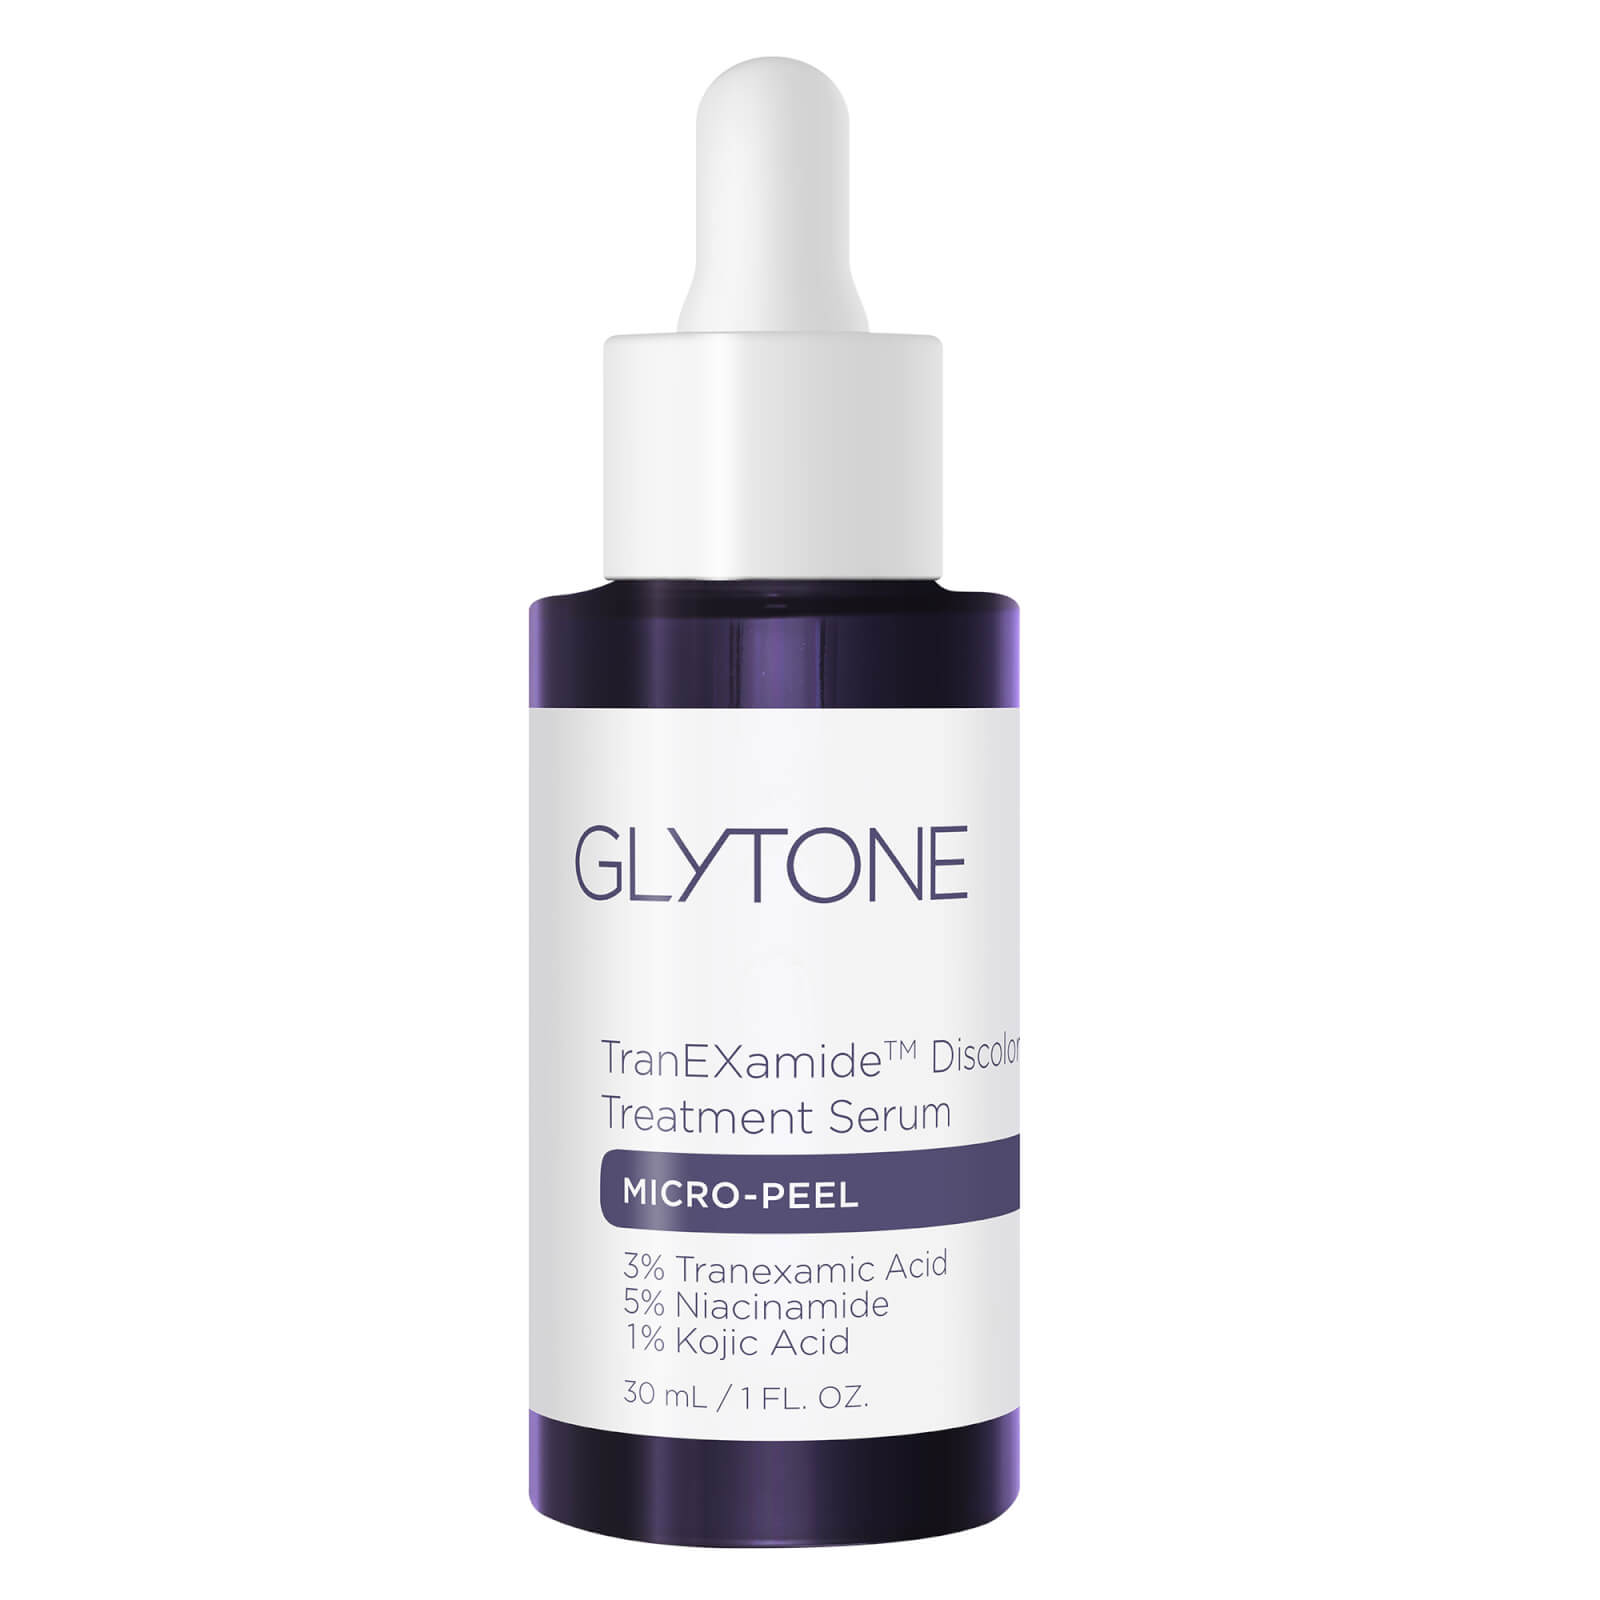 Glytone Tranexamide Discoloration Treatment Serum 1 Fl.oz.